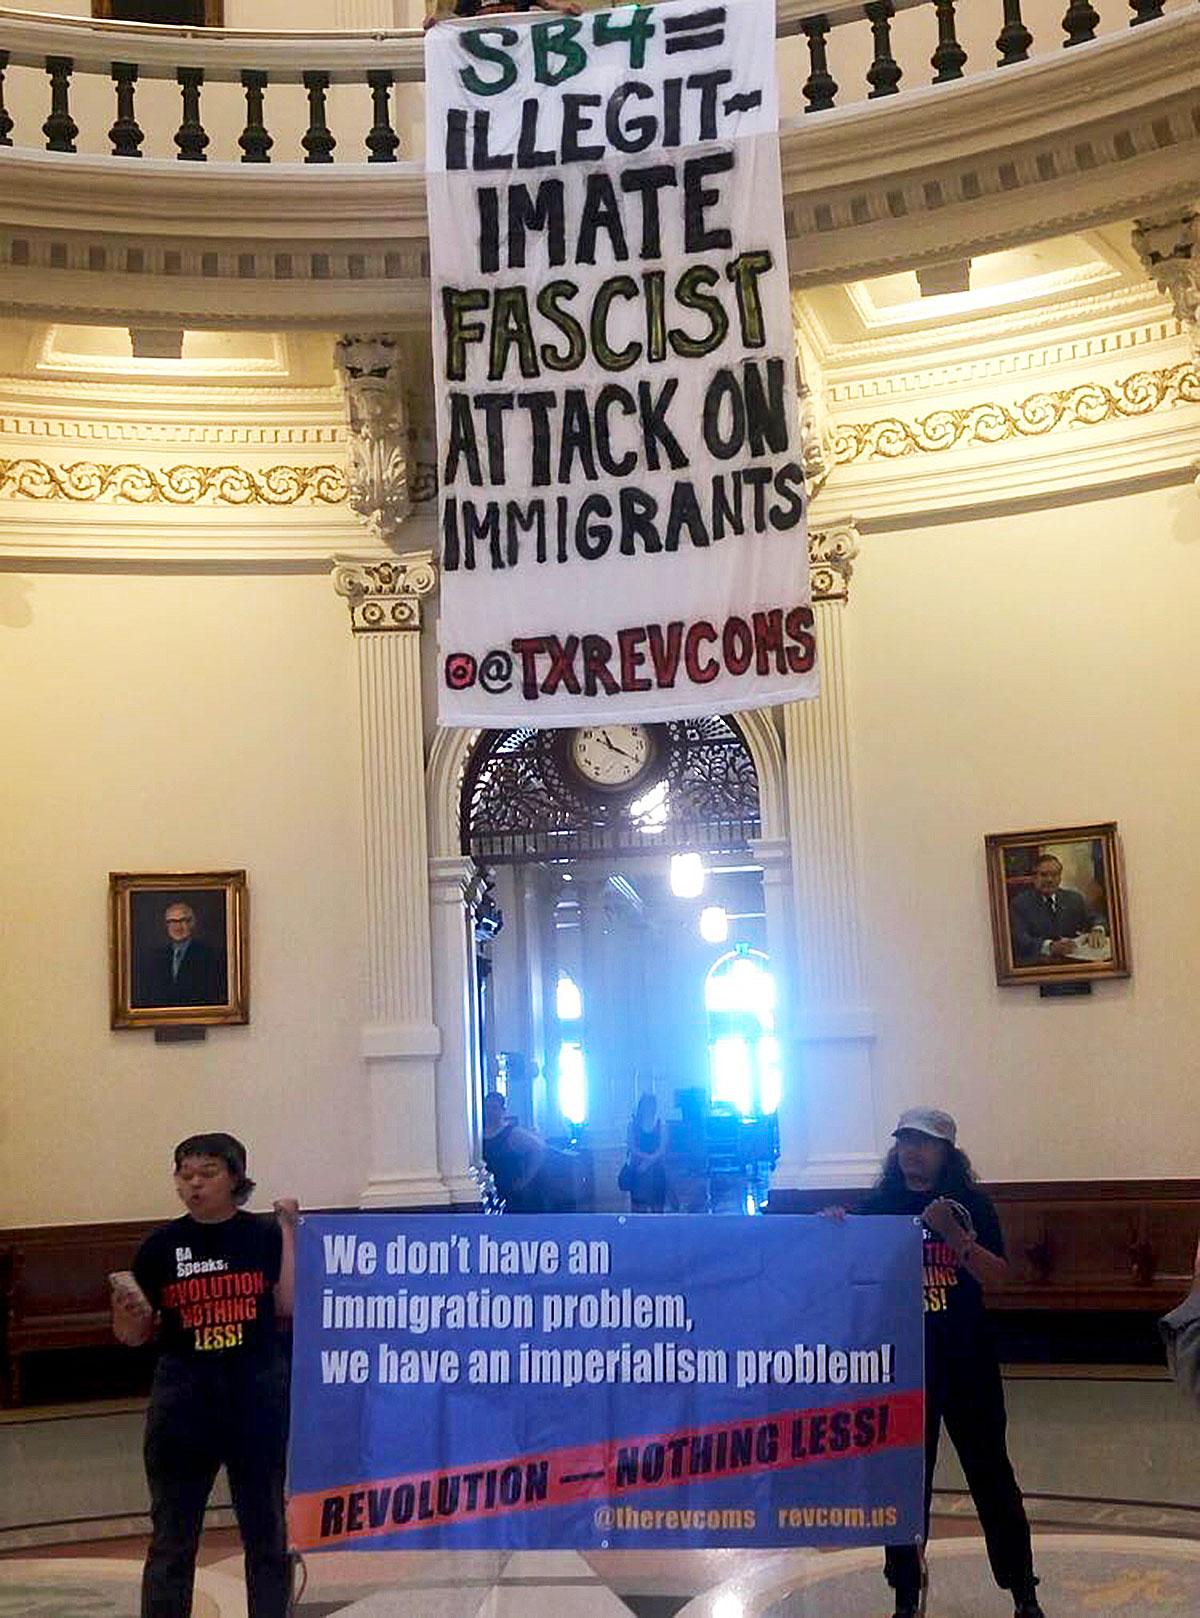 Banner drop in Austin, Texas capitol building says "SB4 Illegitimate Fascist Attack on Immigrants."